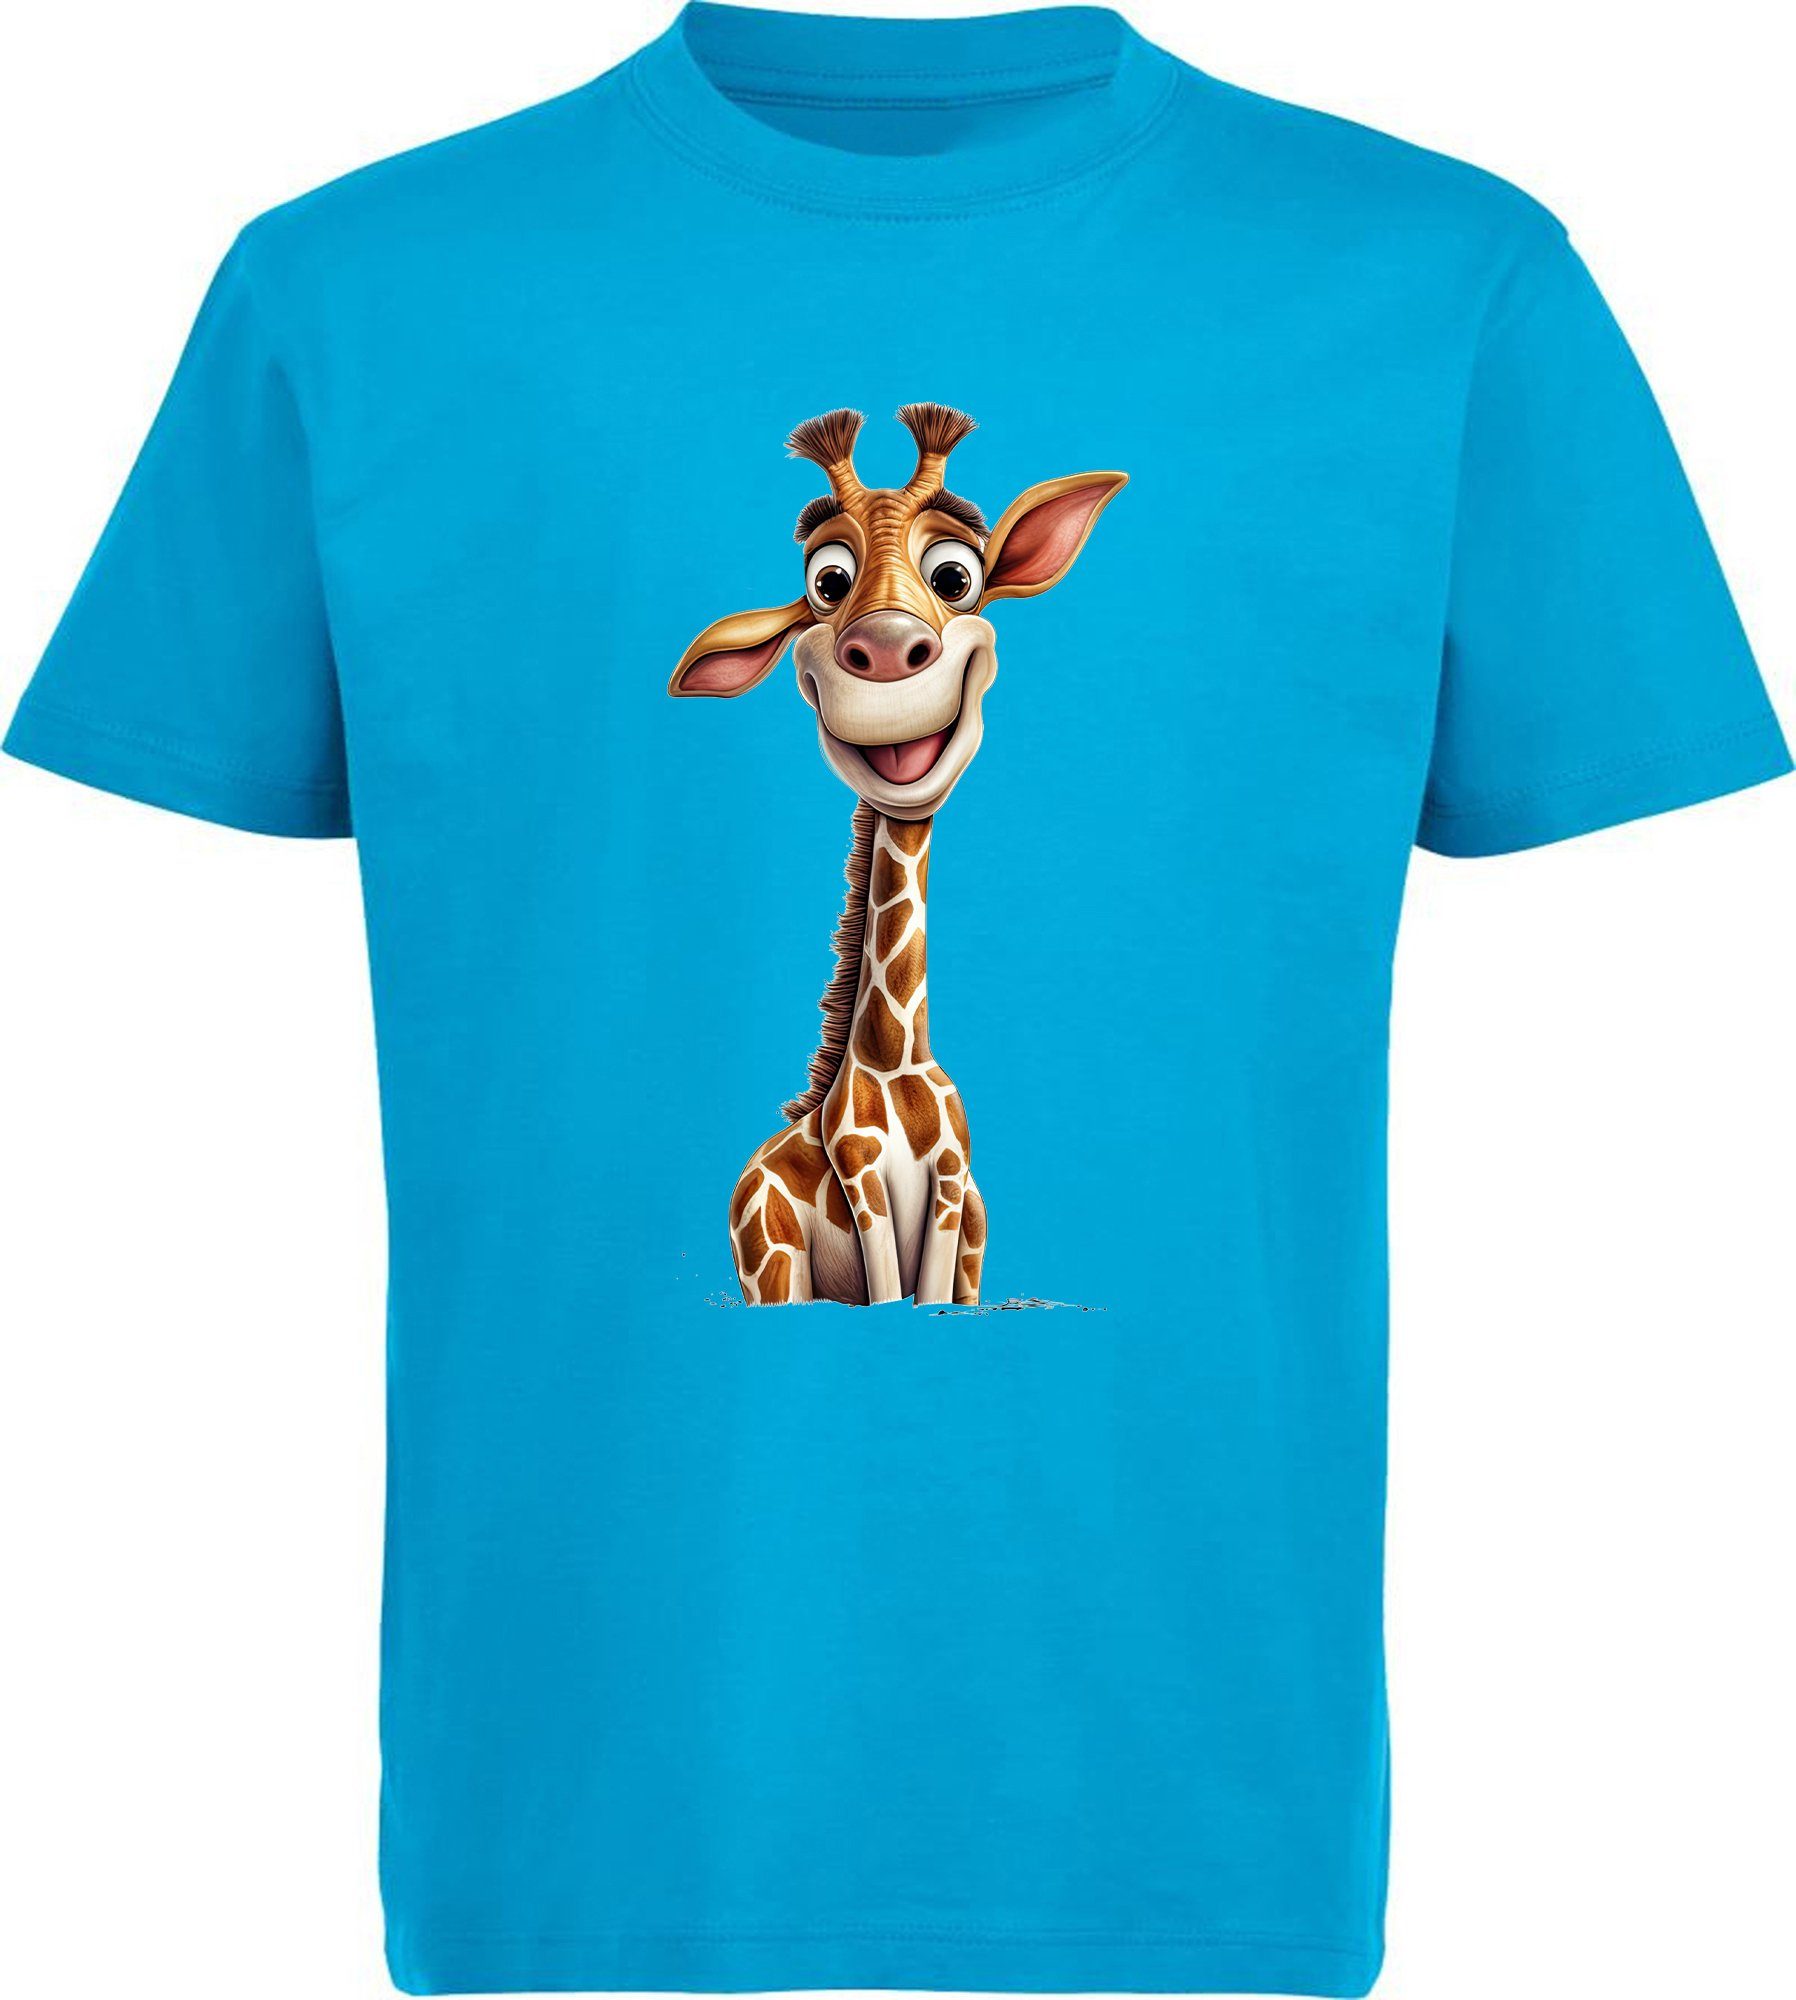 MyDesign24 T-Shirt Kinder Wildtier Print Shirt bedruckt - Baby Giraffe Baumwollshirt mit Aufdruck, i273 aqua blau